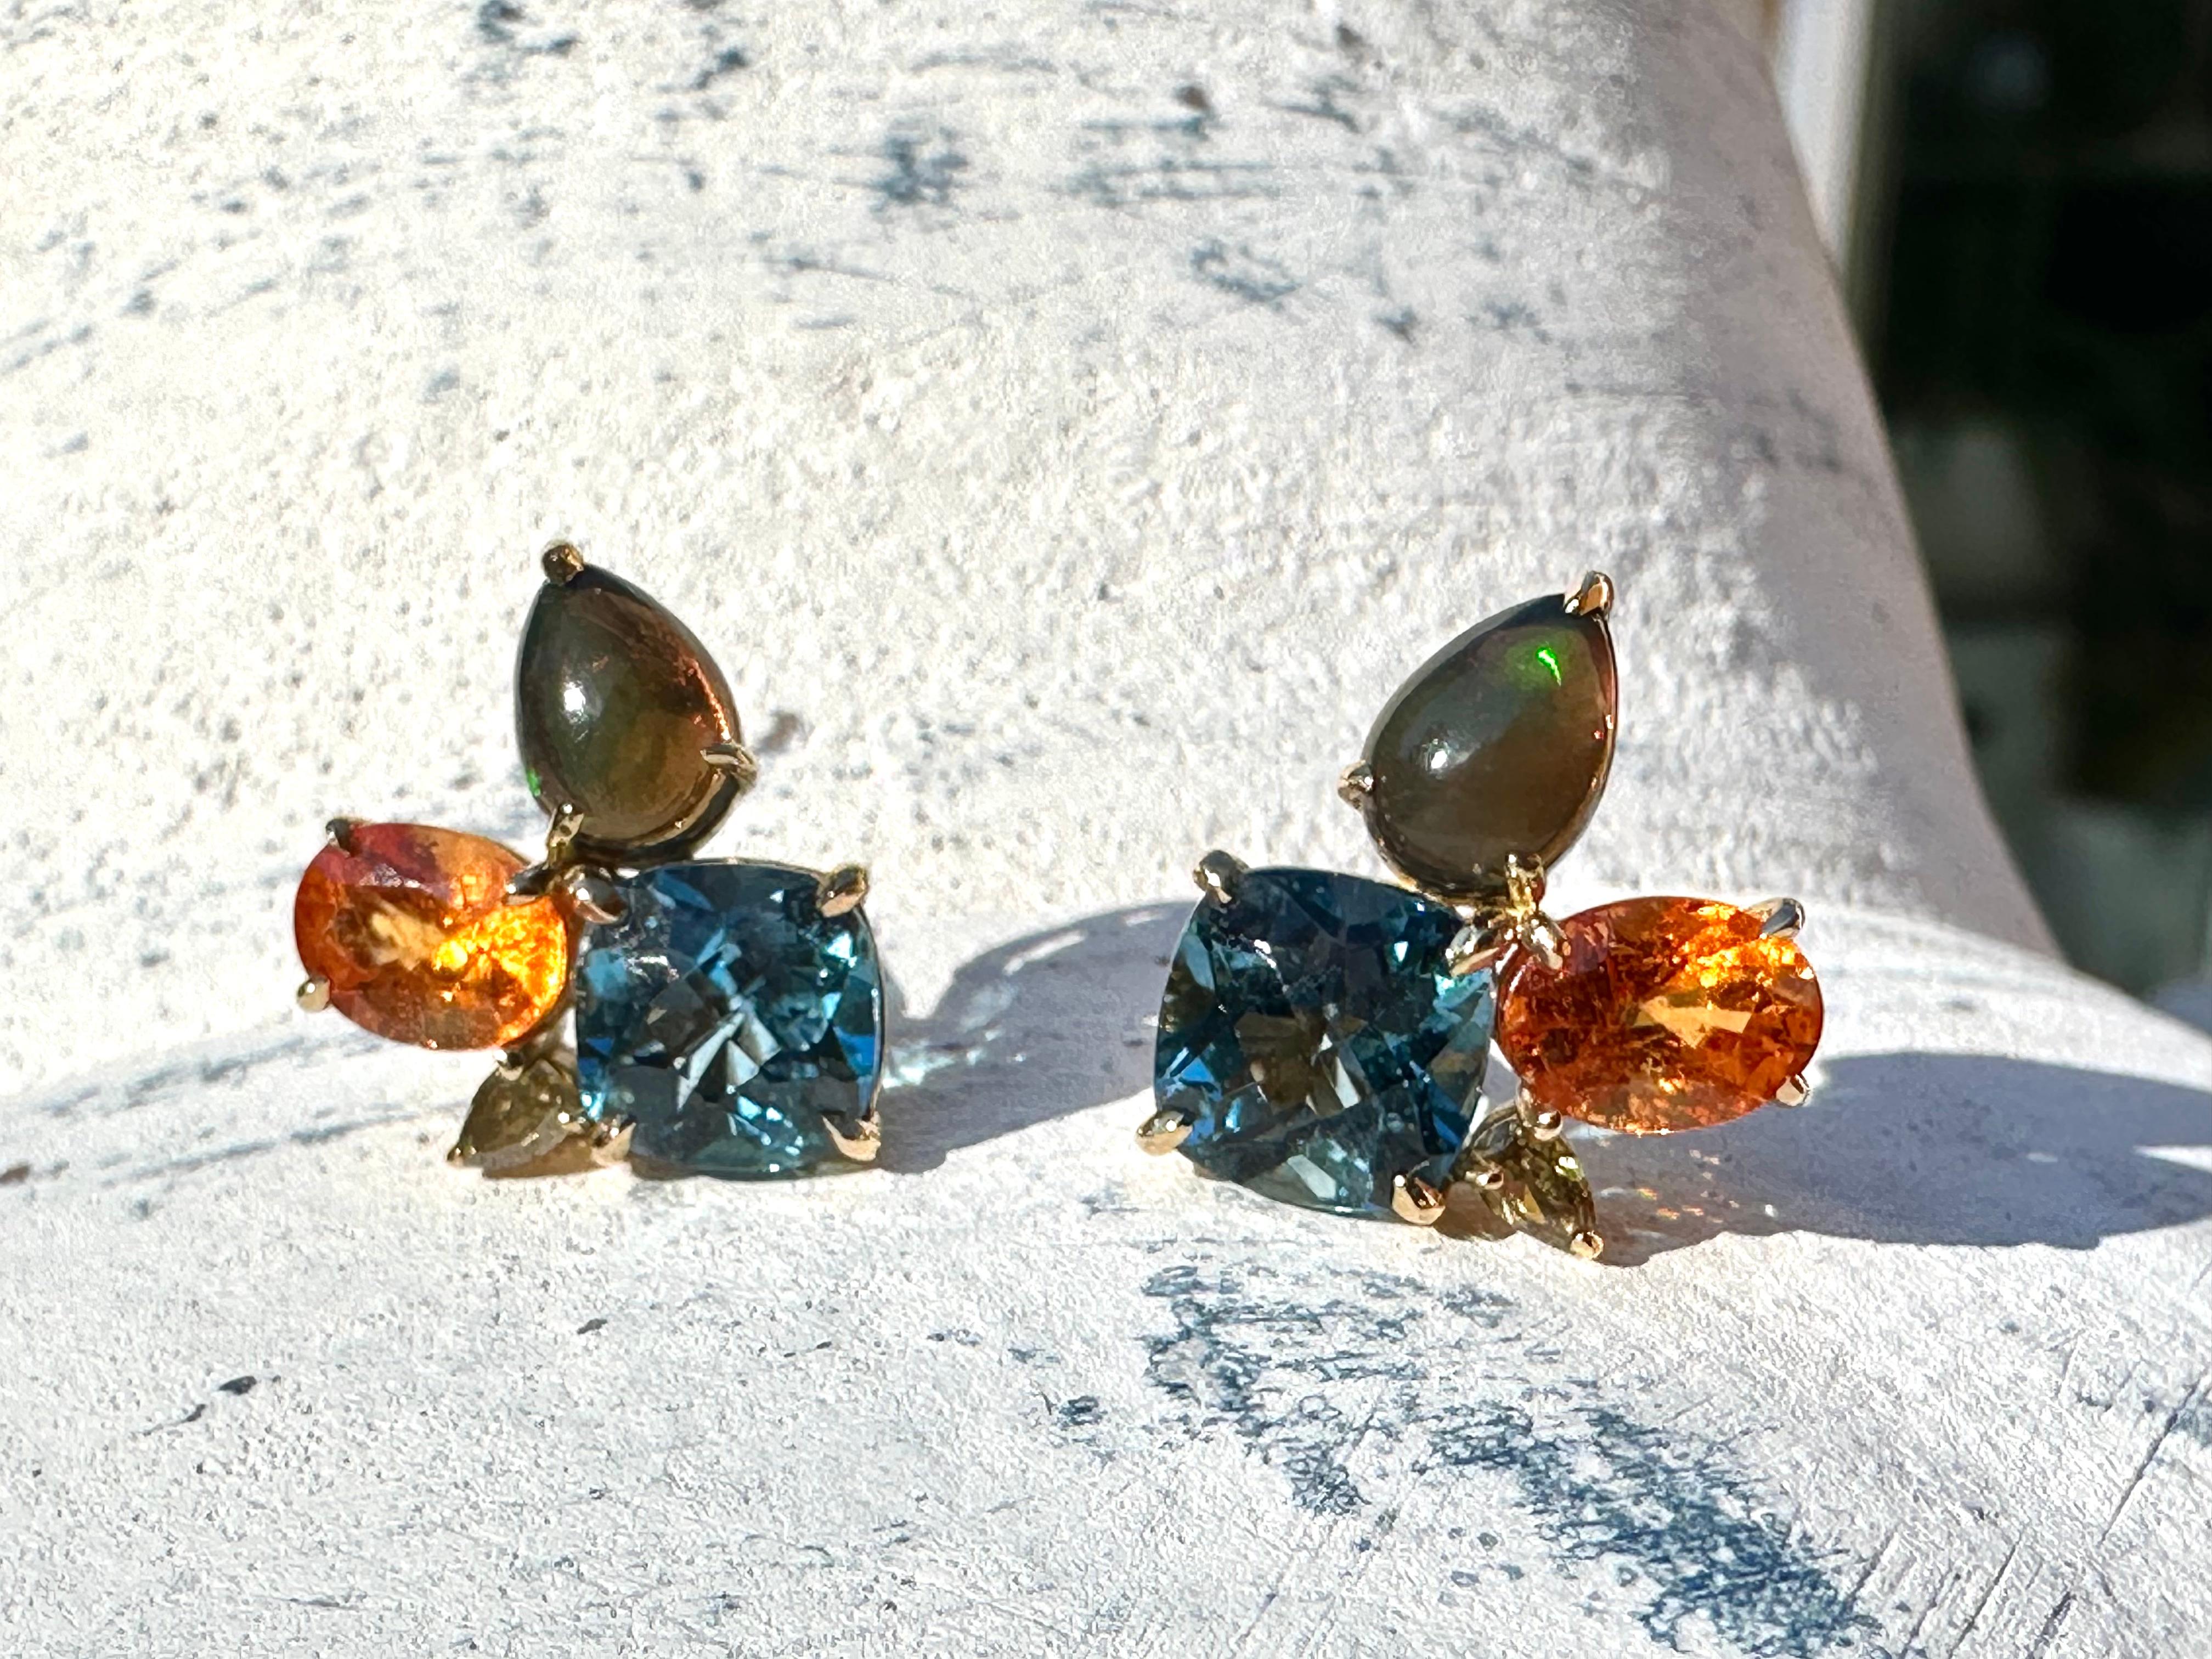 Spessartine Garnet Topaz Black Opal Green Diamond 18k Gold Stud Earrings by Kristin Hanson. This energetic bouquet of gemstones features a black opal enveloped by a colorful London blue topaz and spessartine garnet. The trio is accented by a